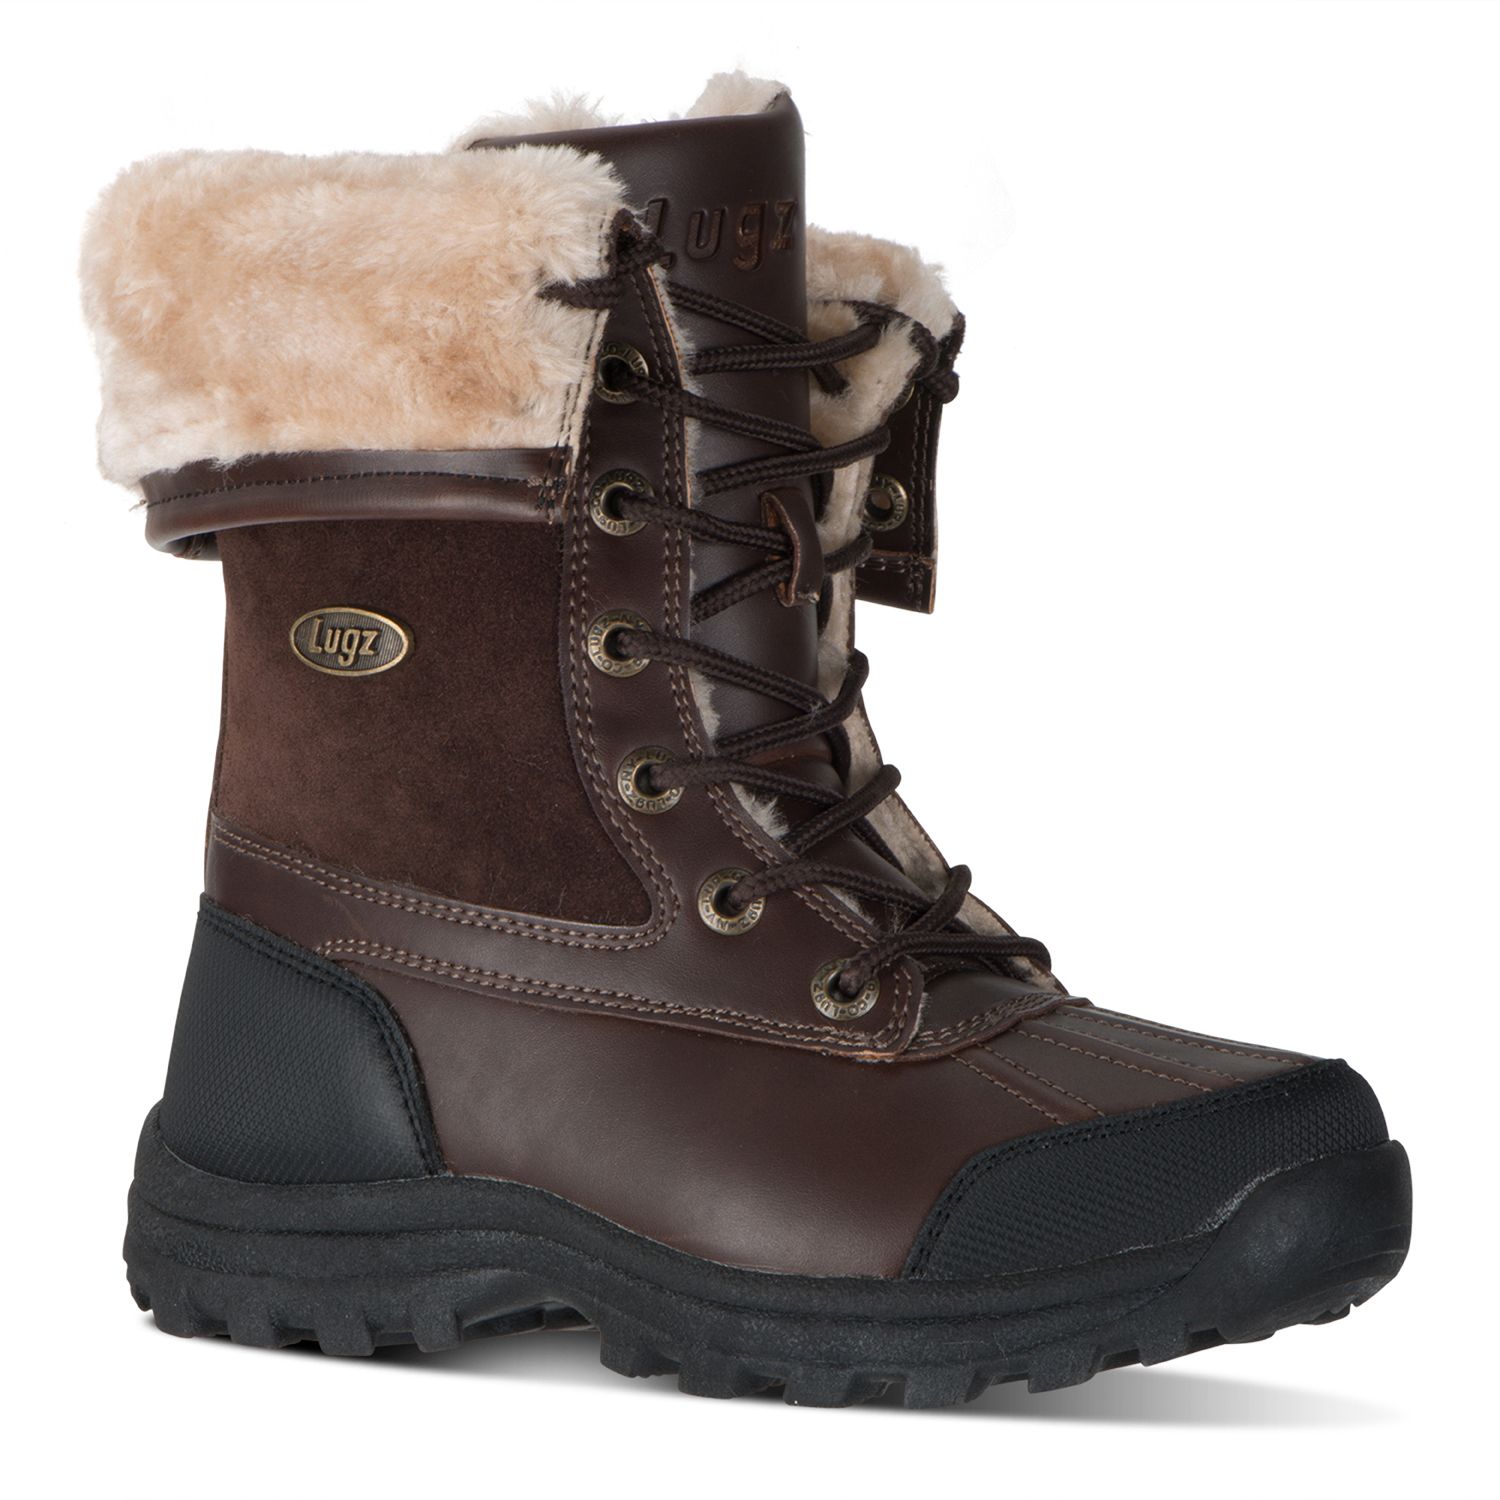 kohls winter boots